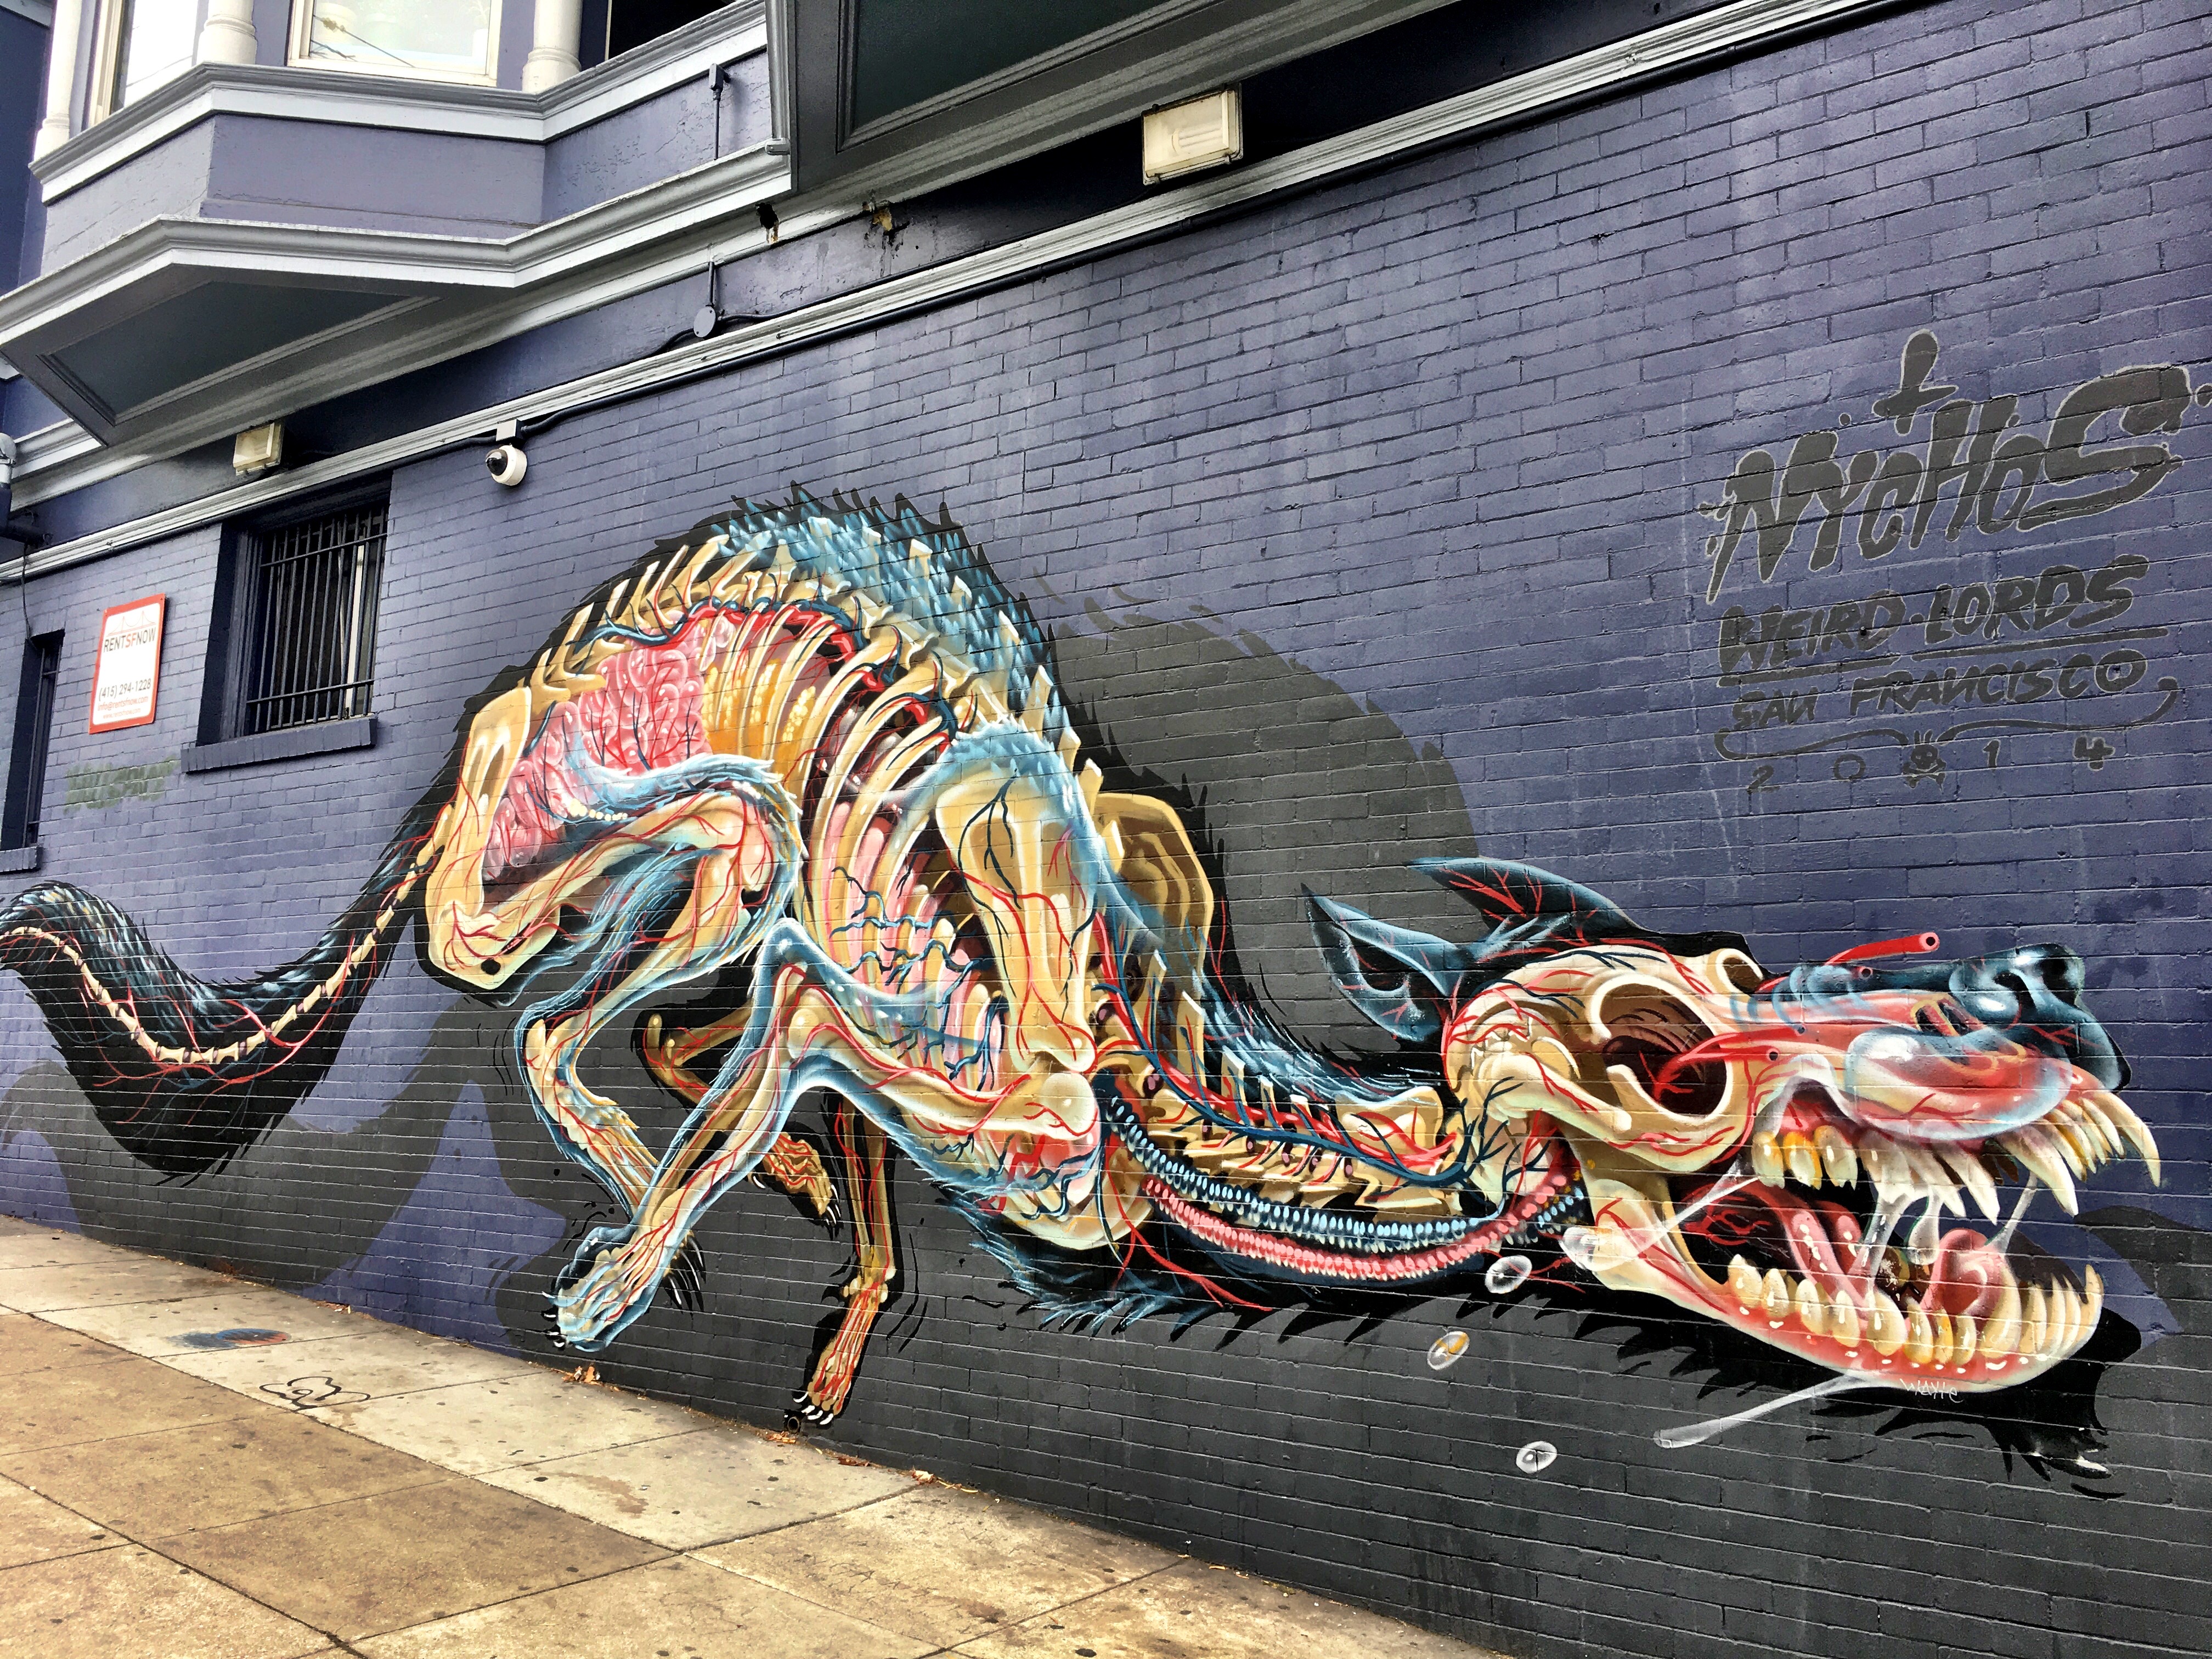 Китайский дракон граффити